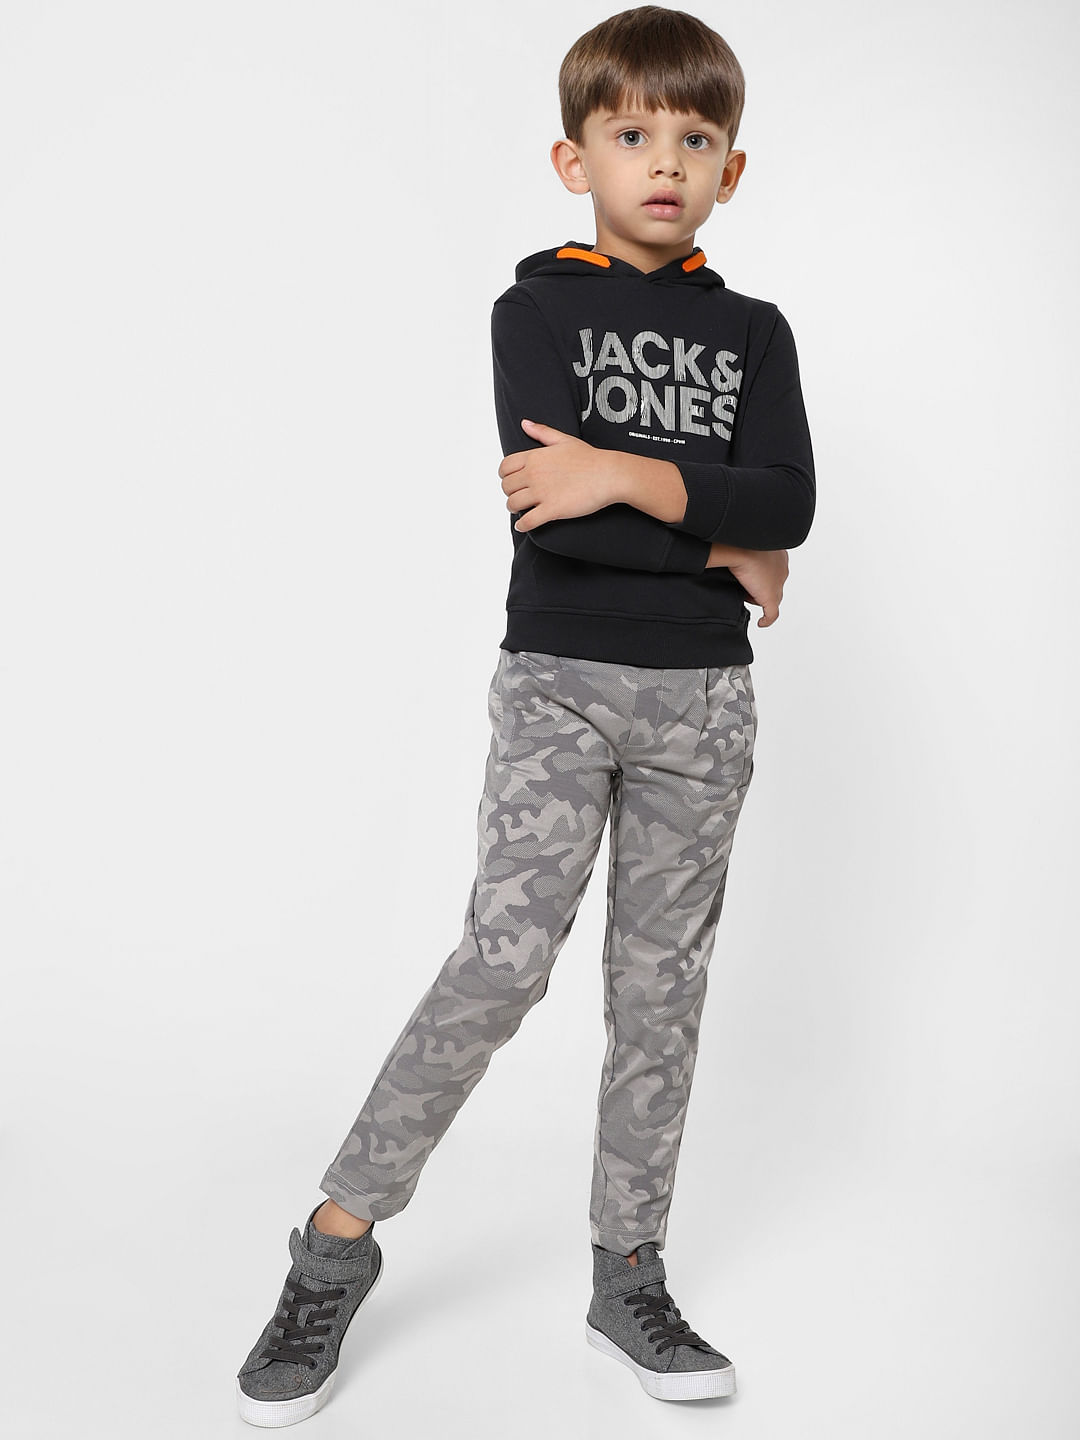 Buy Grey Low Rise Camo Pants for Boys Online at JackJones Junior 154293001